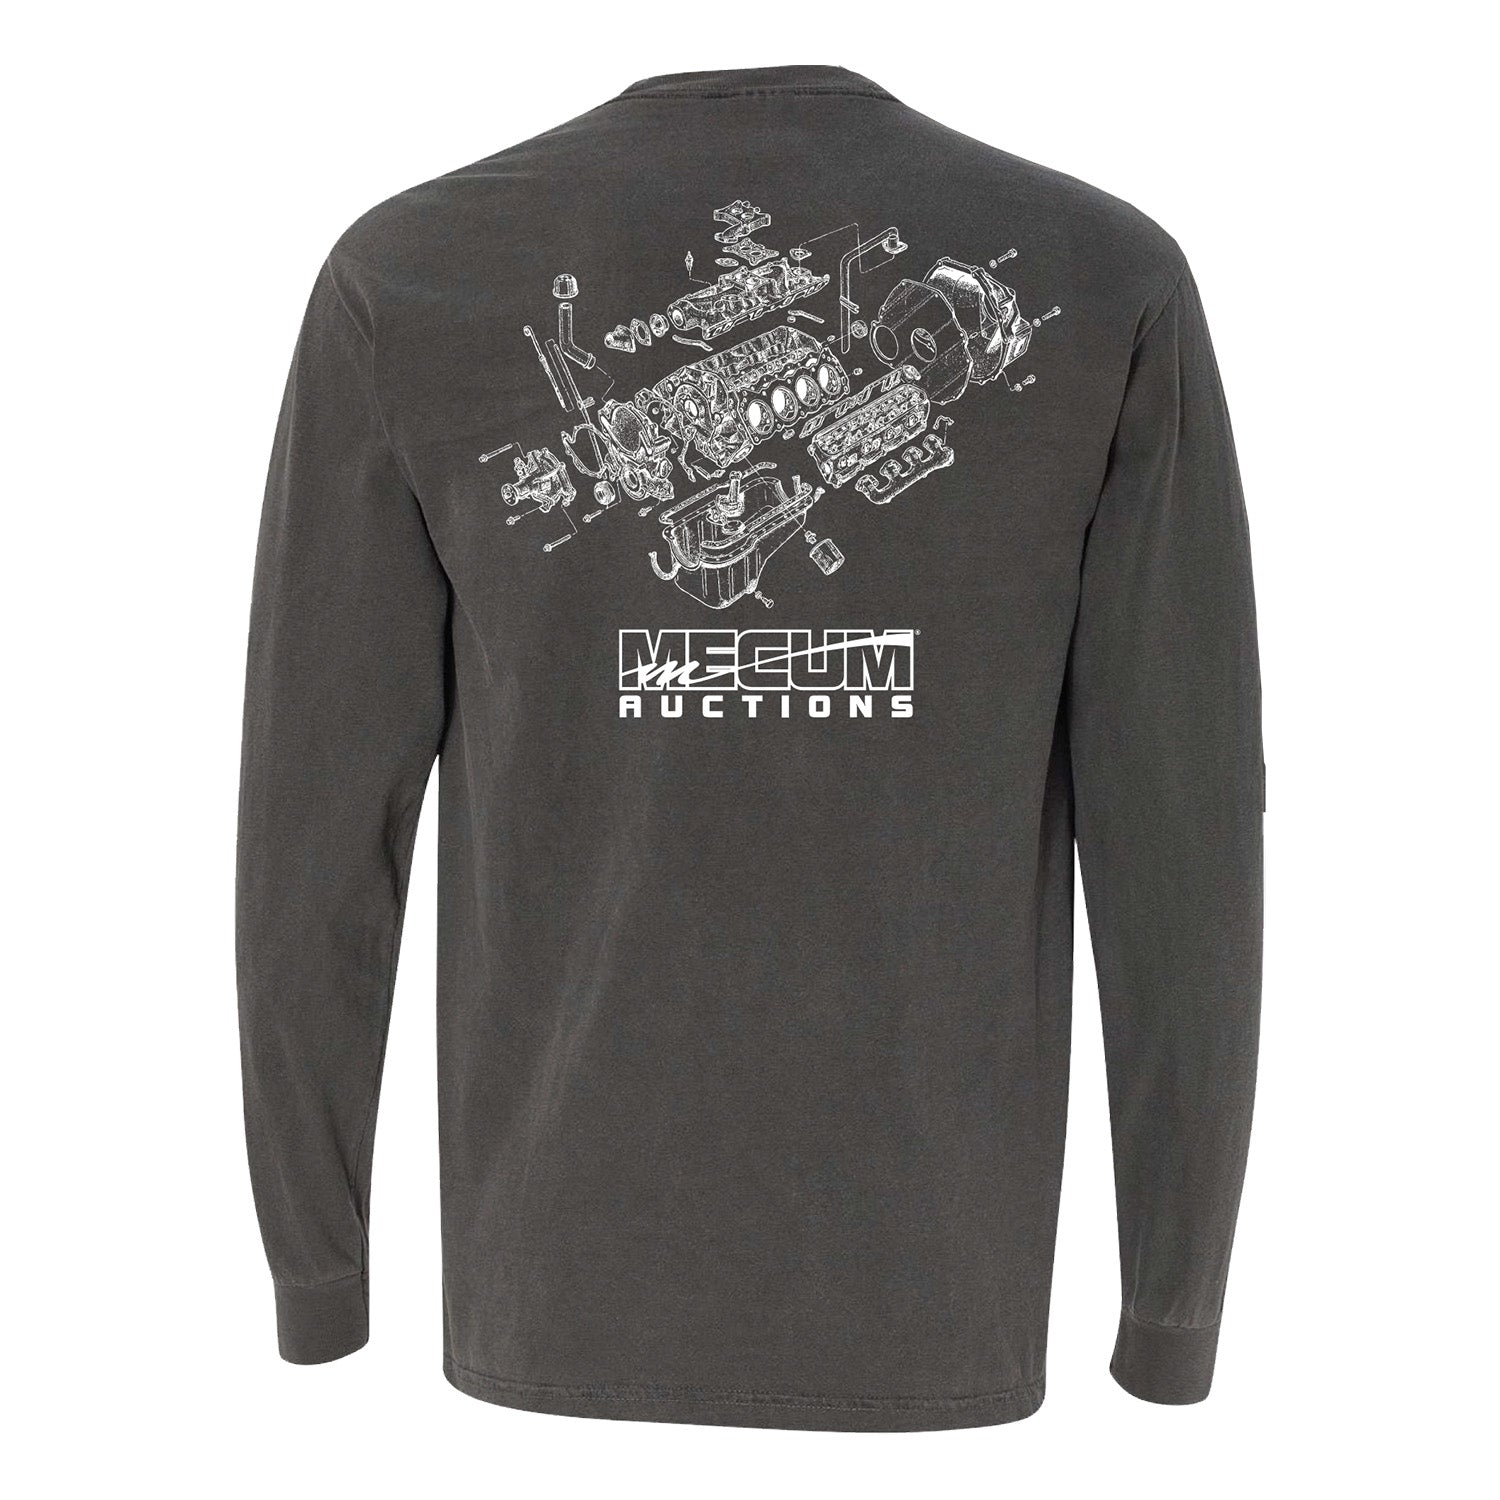 Mecum Auction Garage Pocket Longsleeve T-Shirt in Black - Back View